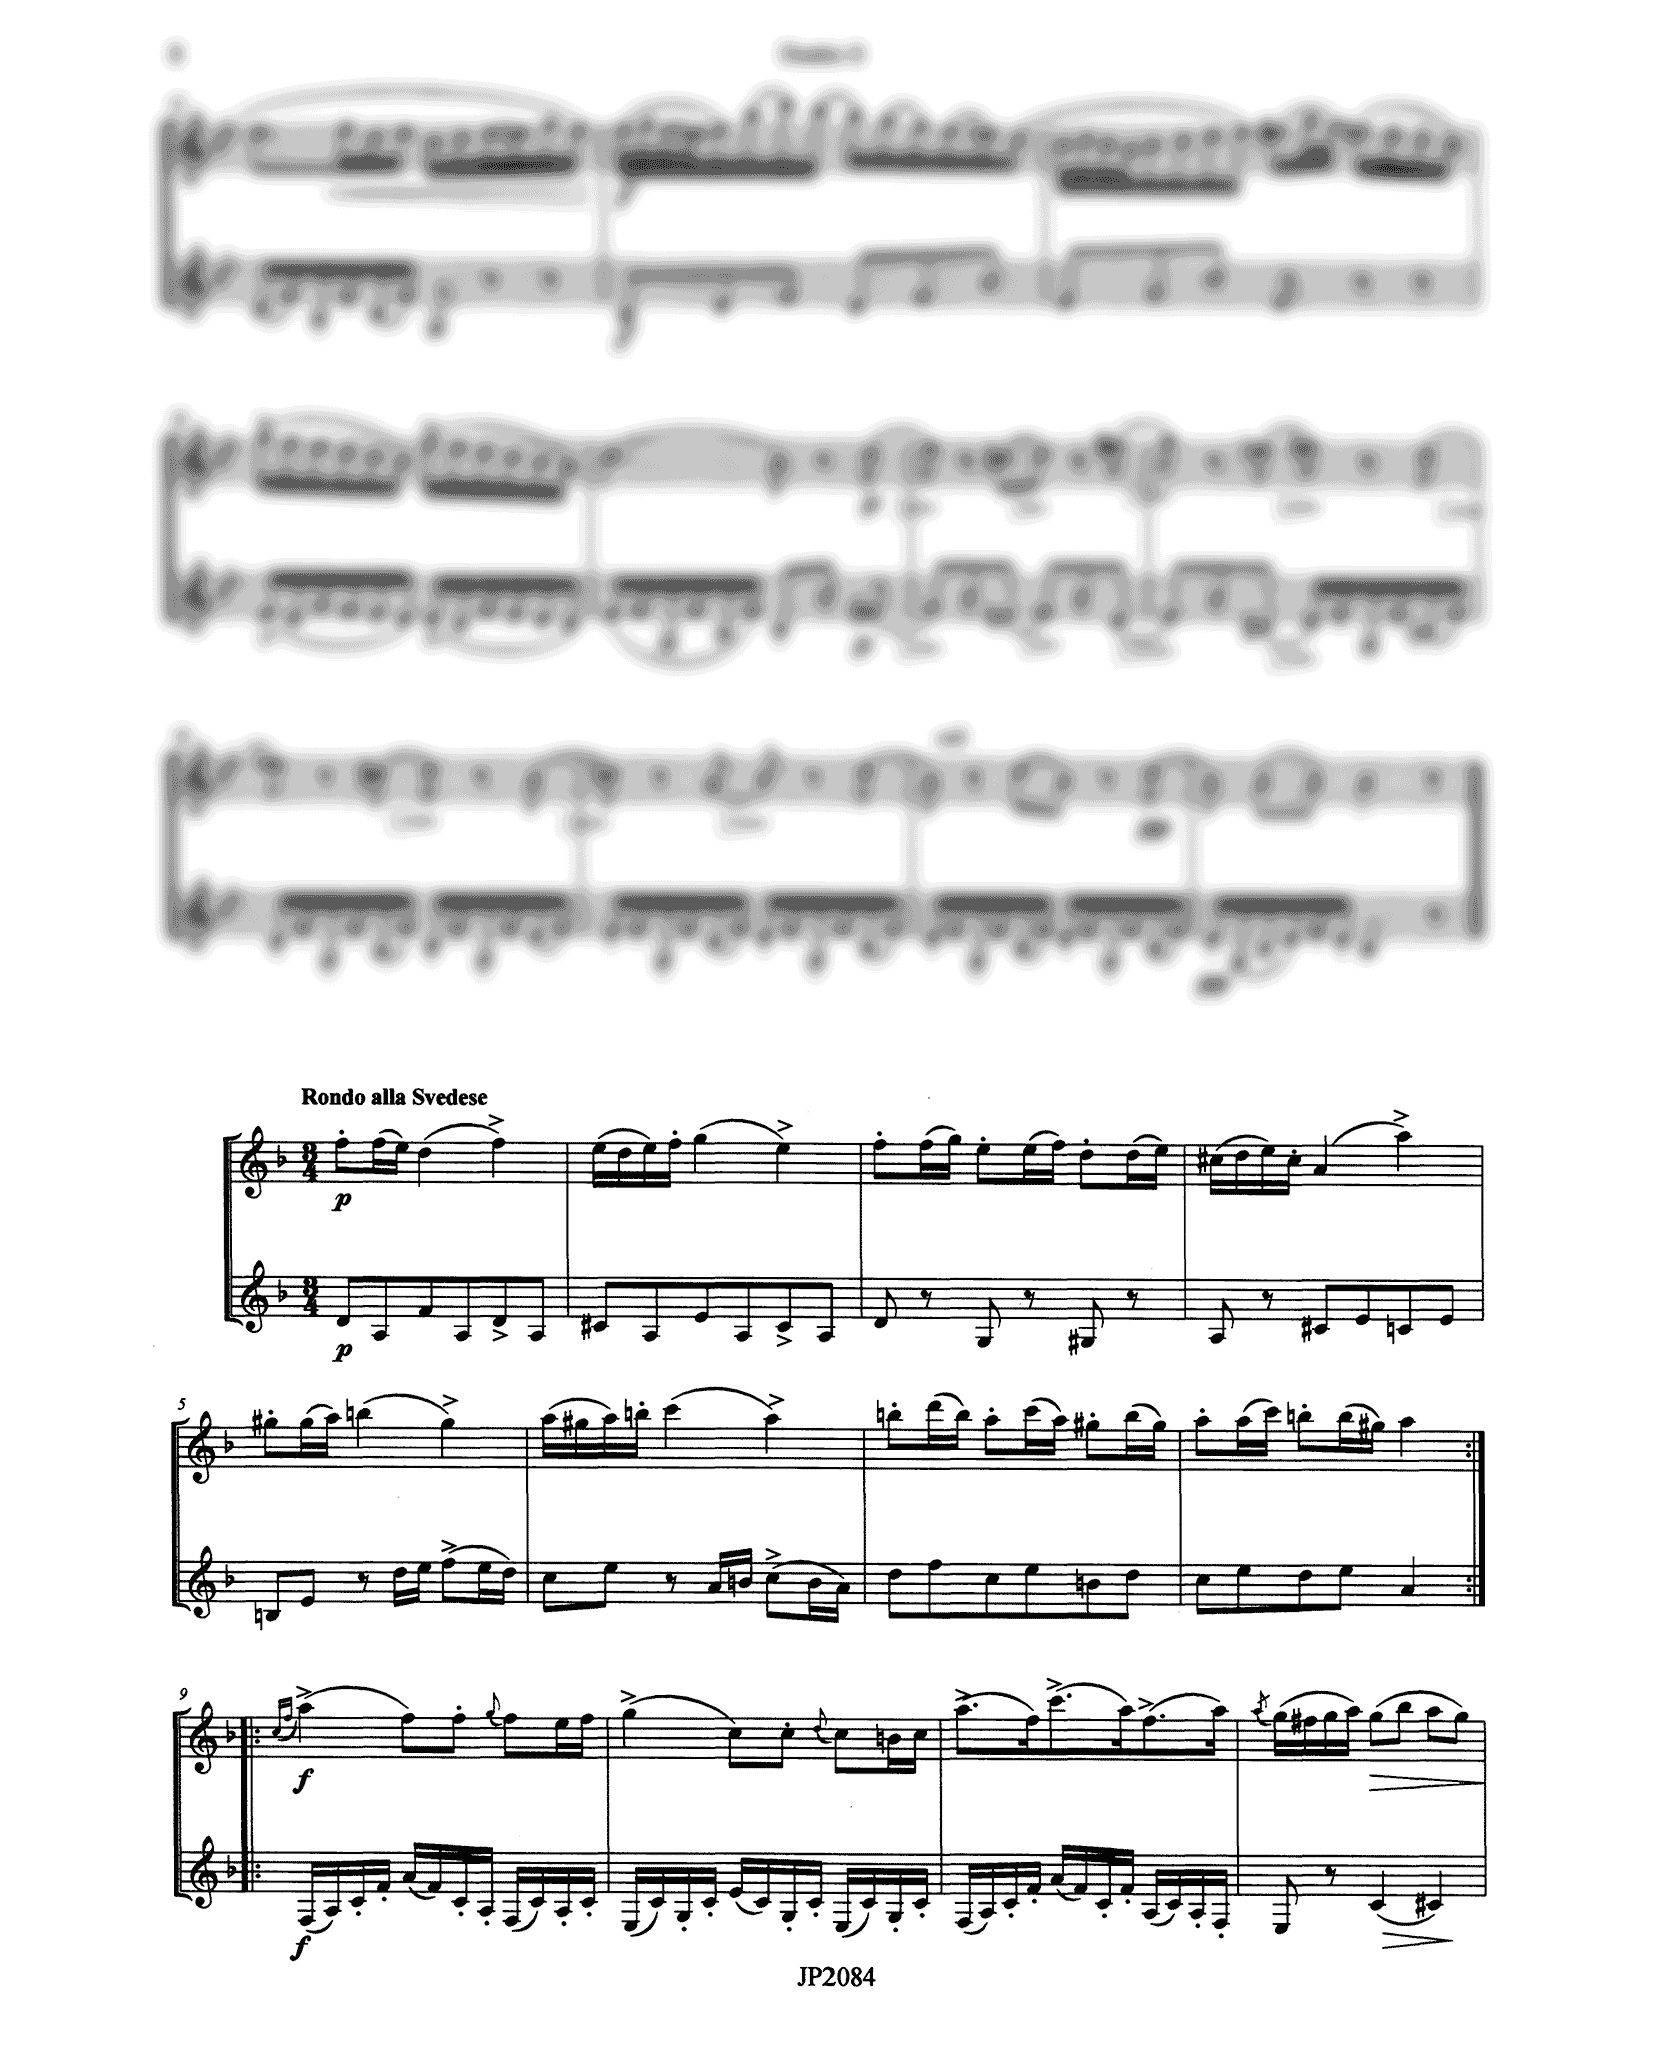 Crusell Clarinet Duet No. 2 in D Minor score - Movement 3